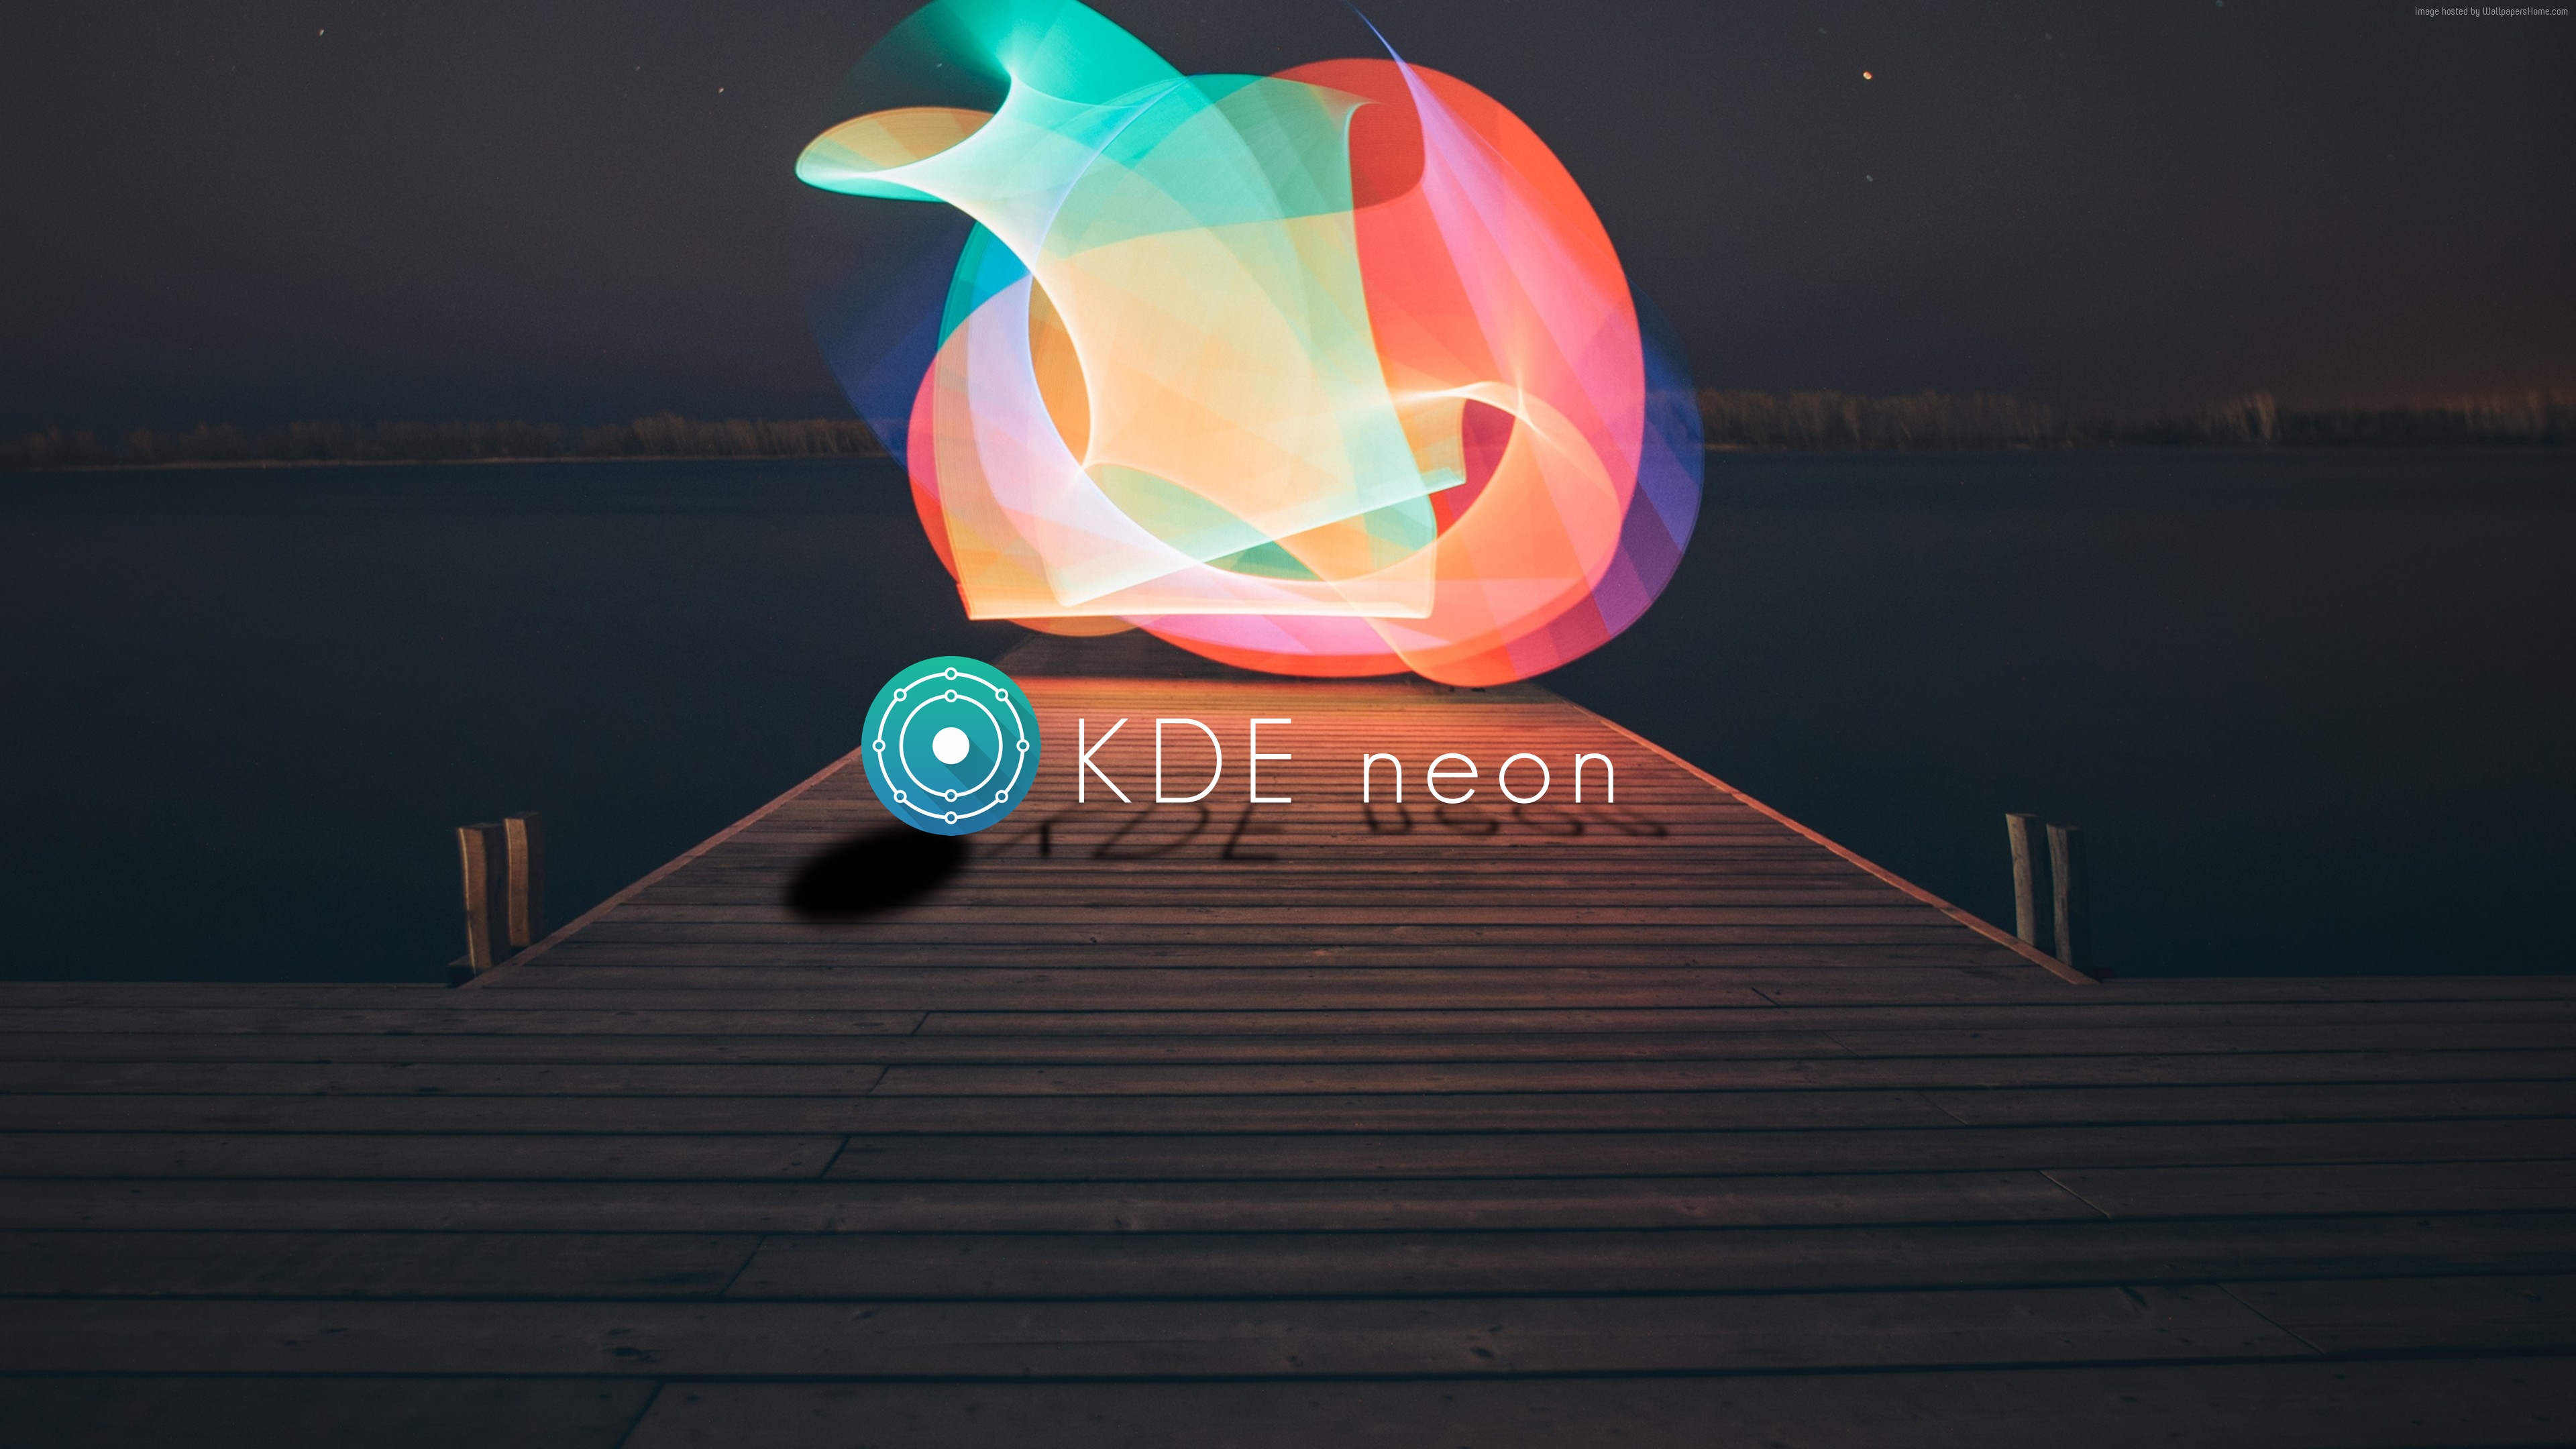 Fabio's Art KDE neon and KDE wallpaper